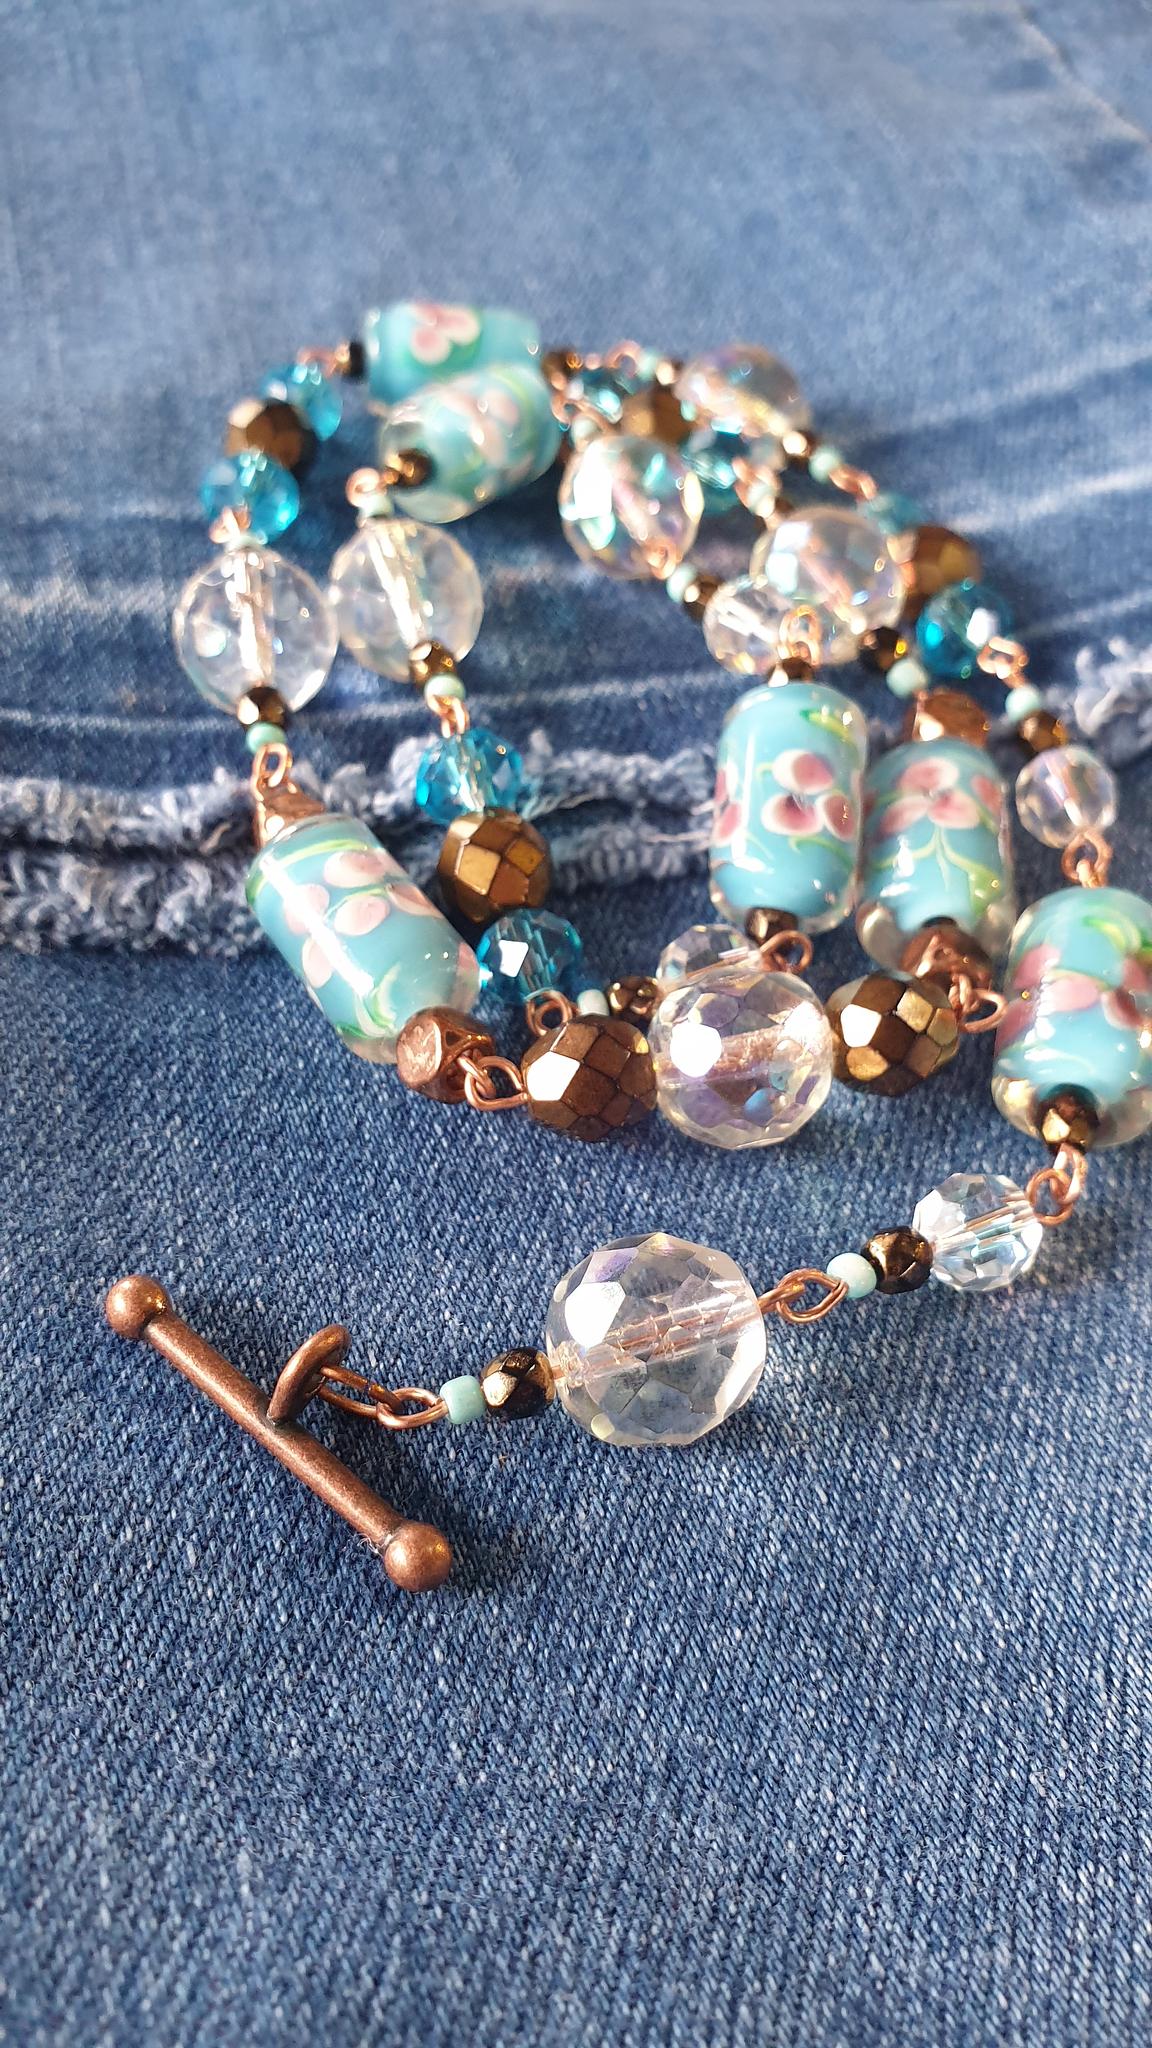 VENETIAN glass fiorato wedding cake beads necklace - Morning Glory Jewelry  & Antiques